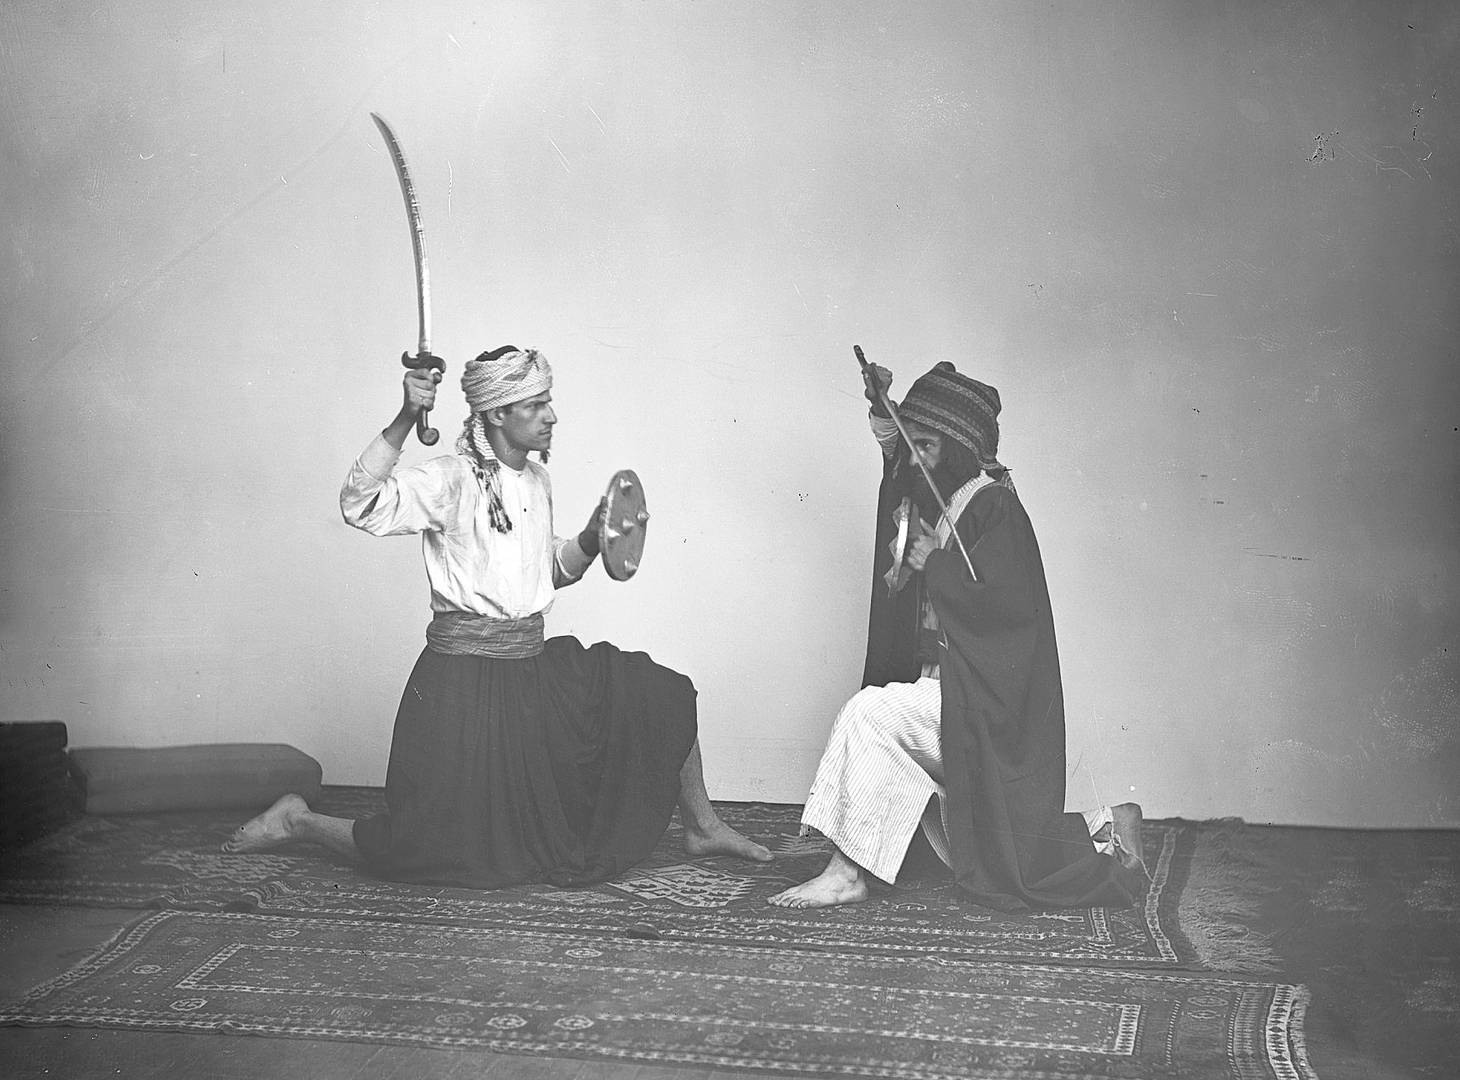 «Жизнь на Святой земле» в представлении семьи Арбили из Сирии. 1880-е